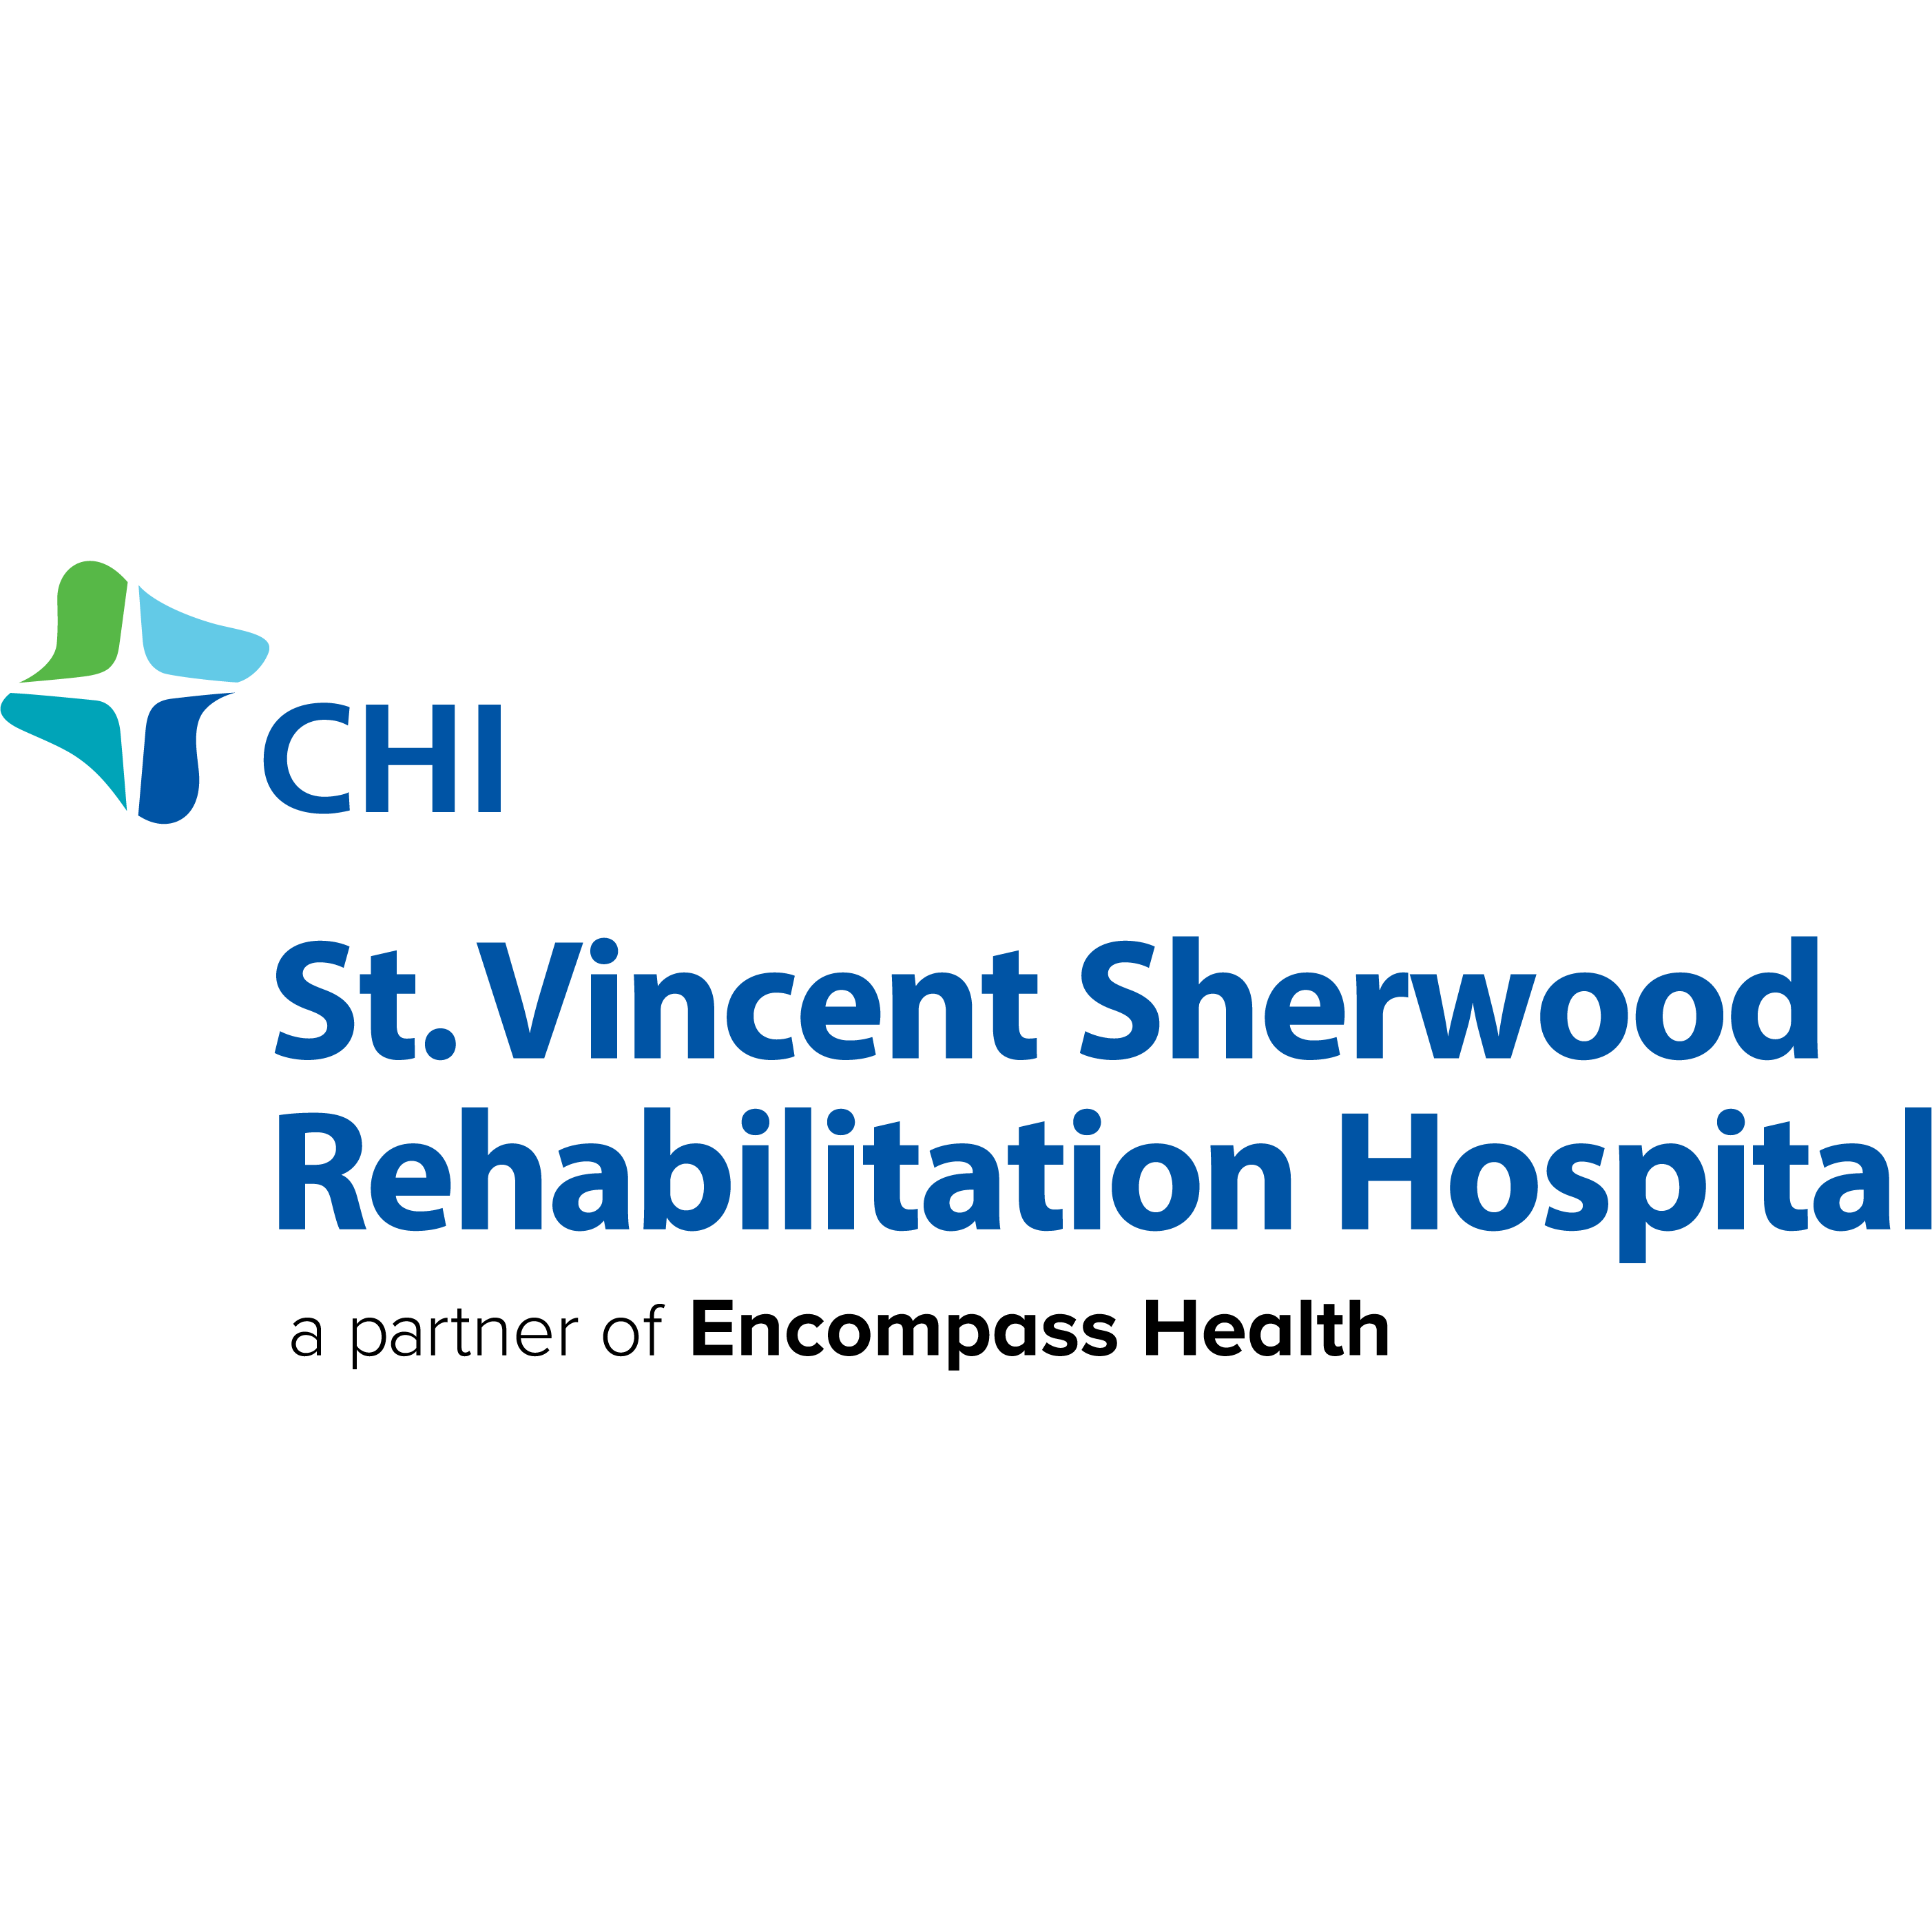 CHI St. Vincent Sherwood Rehabilitation Hospital, a partner of Encompass Health Logo